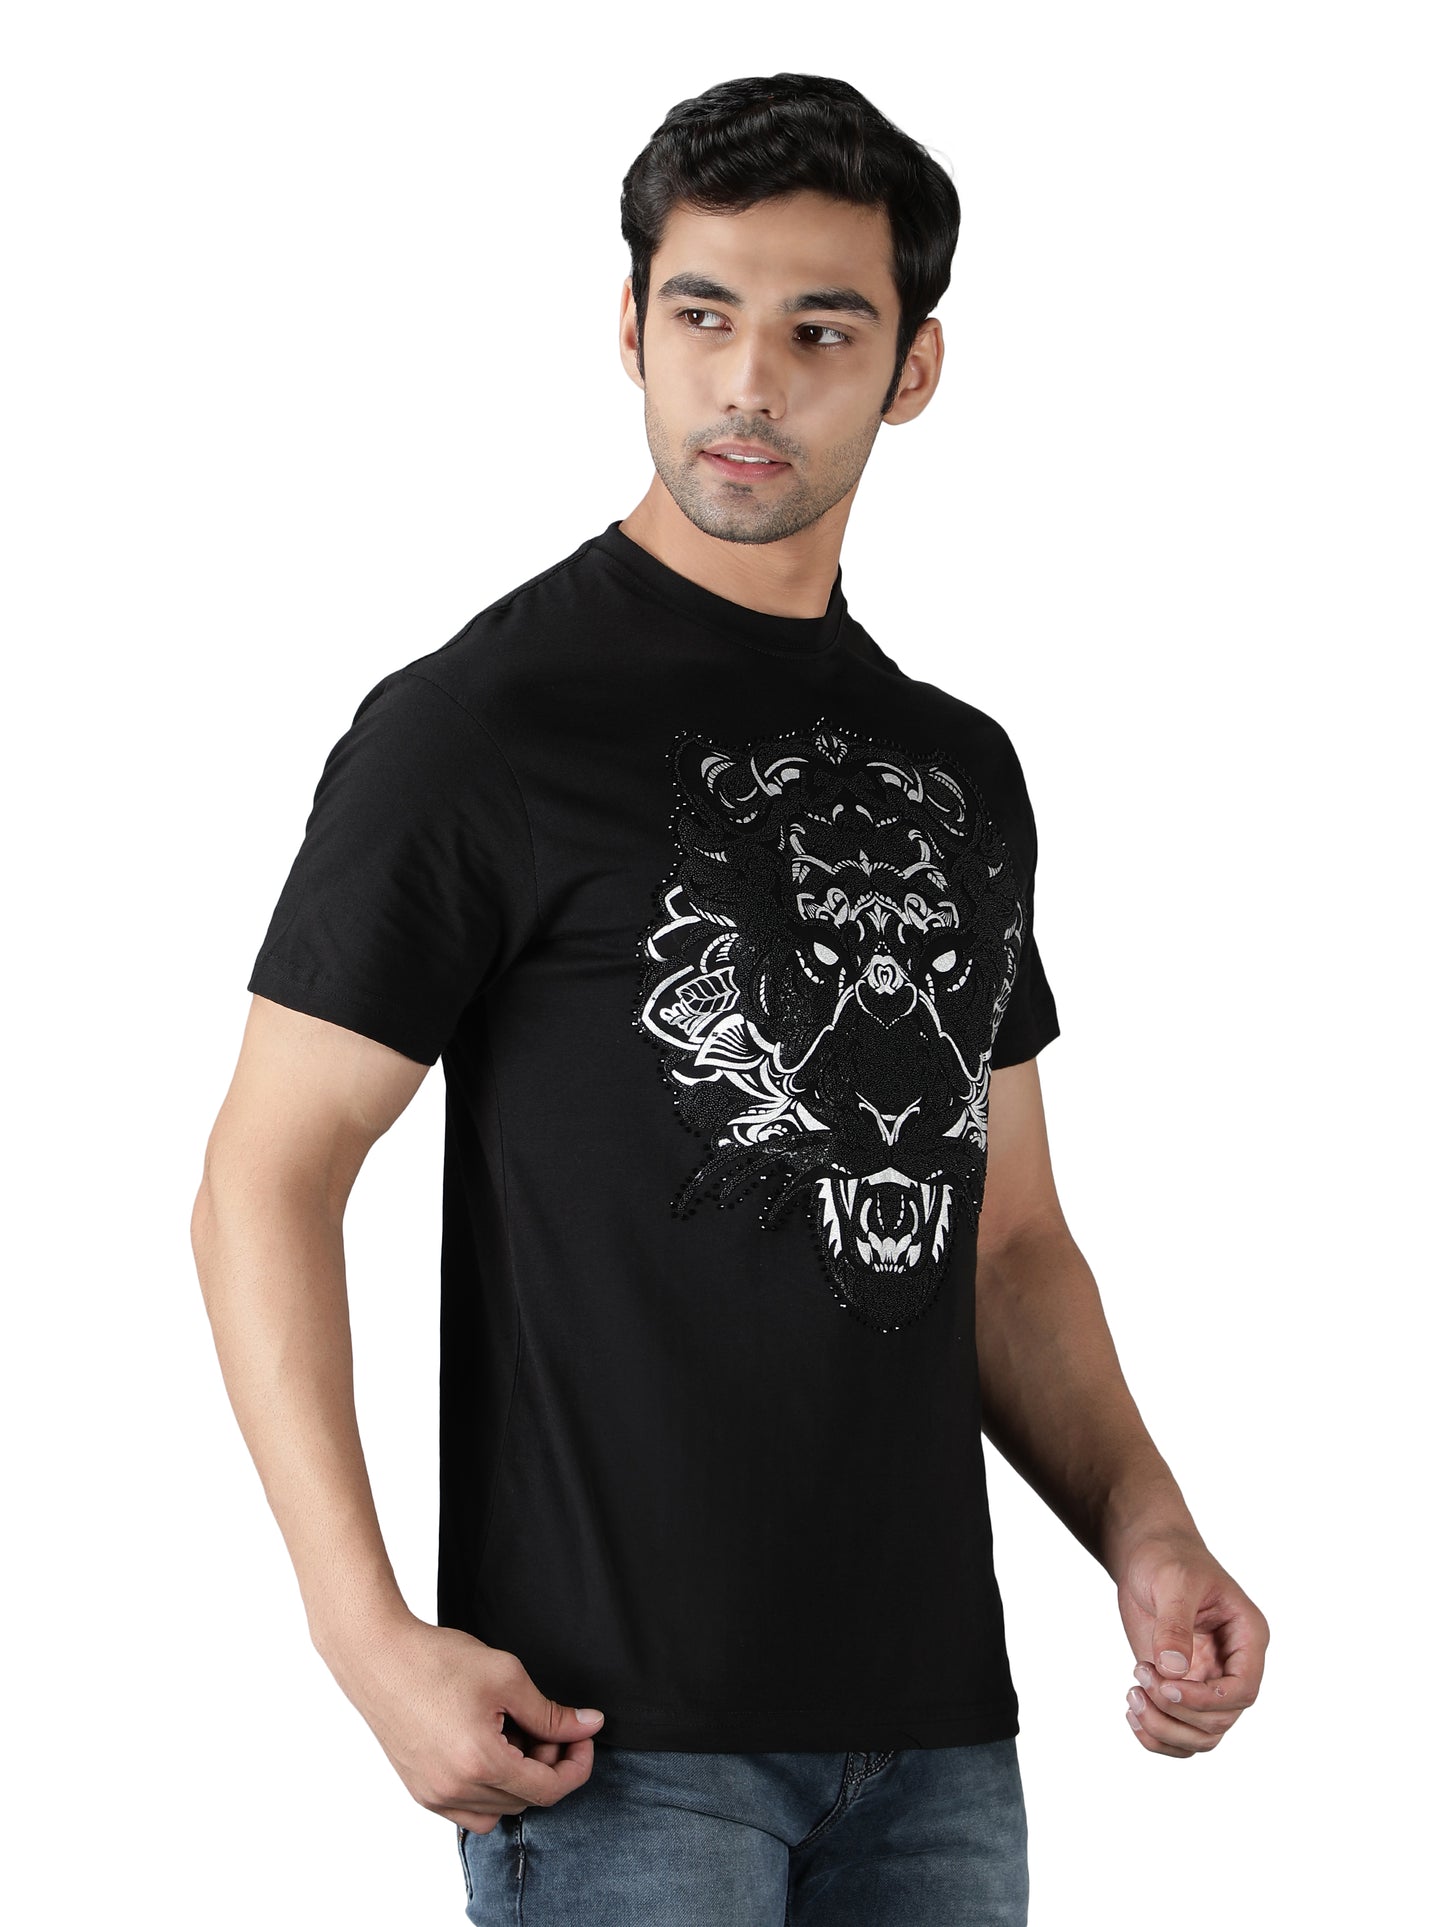 NUEVOSPORTA Men's Cotton Graphic Printed Black T-Shirt